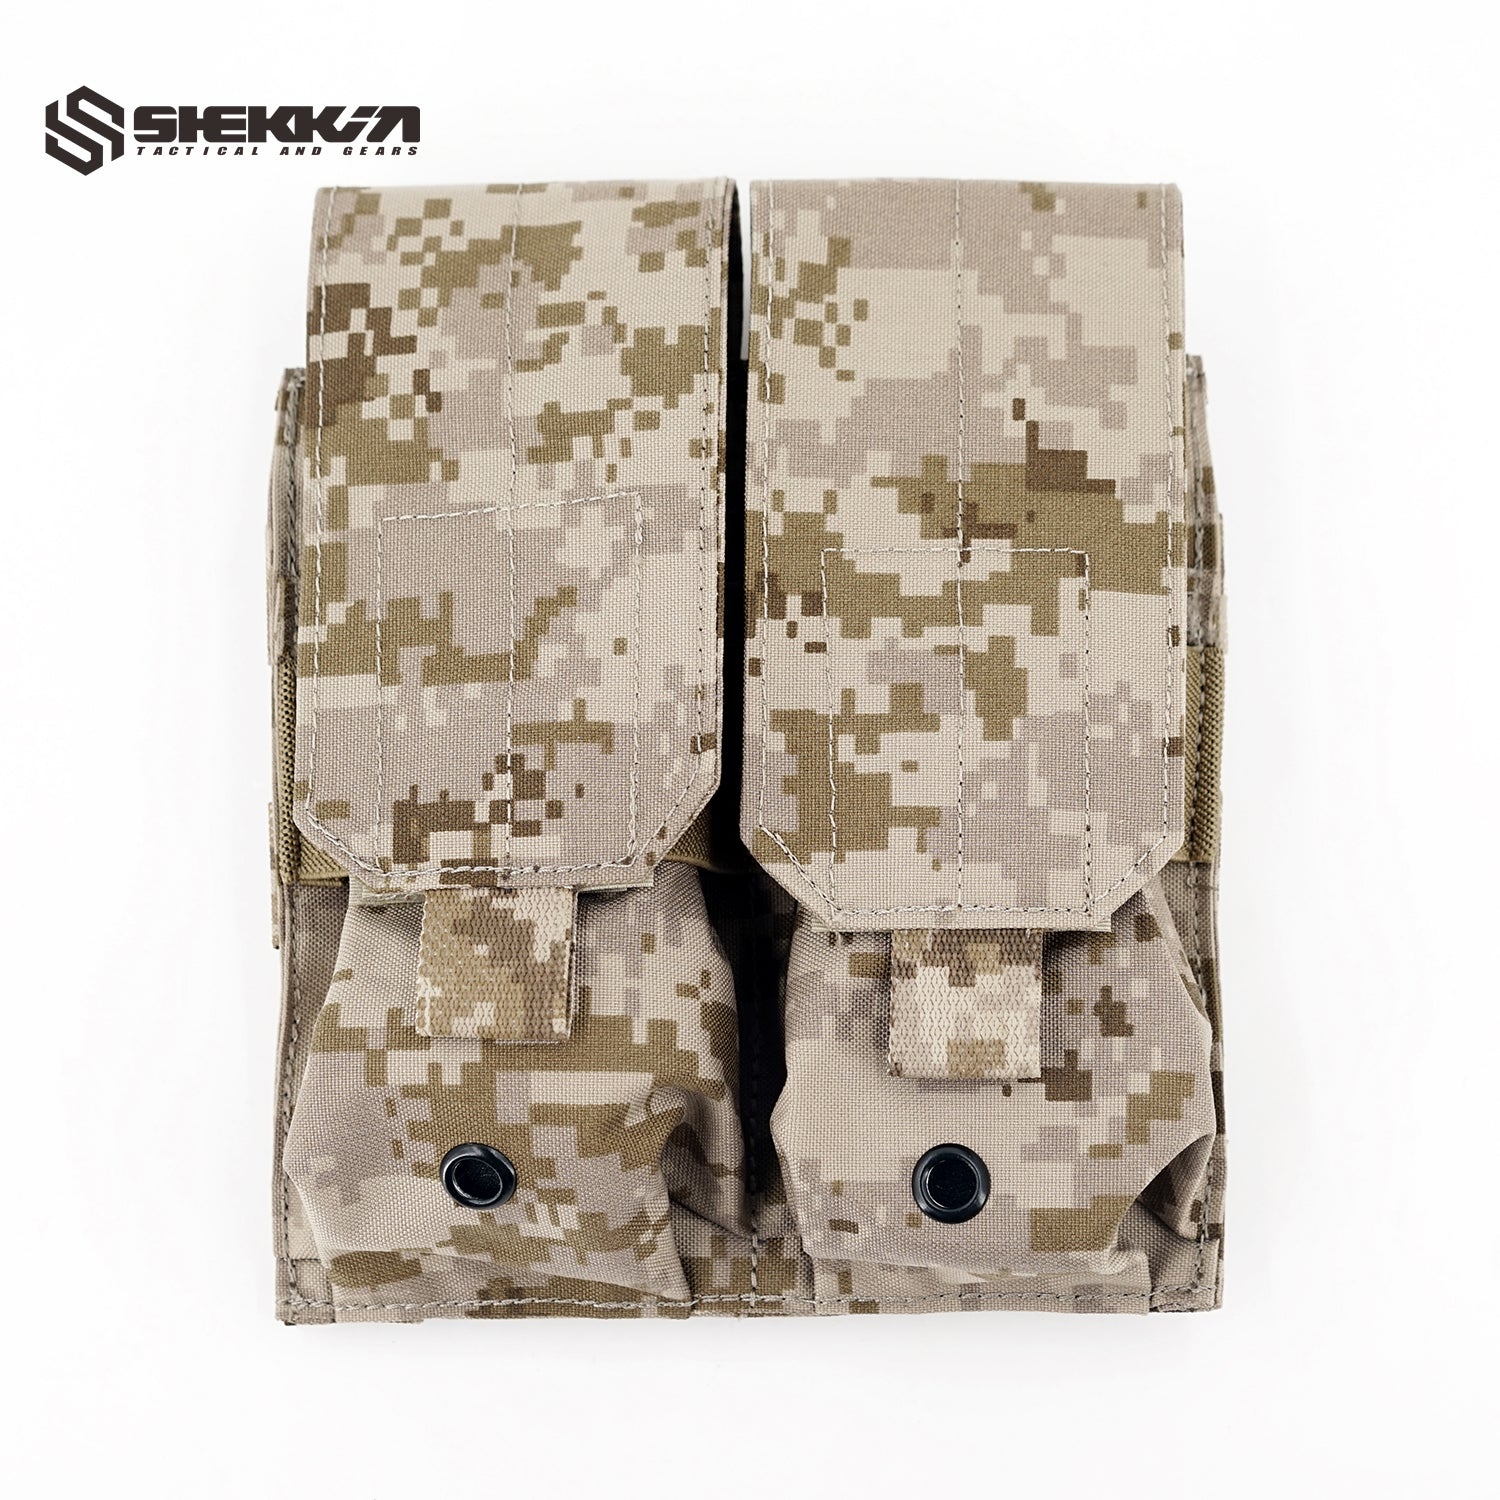 Shekkin gears AOR1 double M4 mag pouch - Shekkin Gears